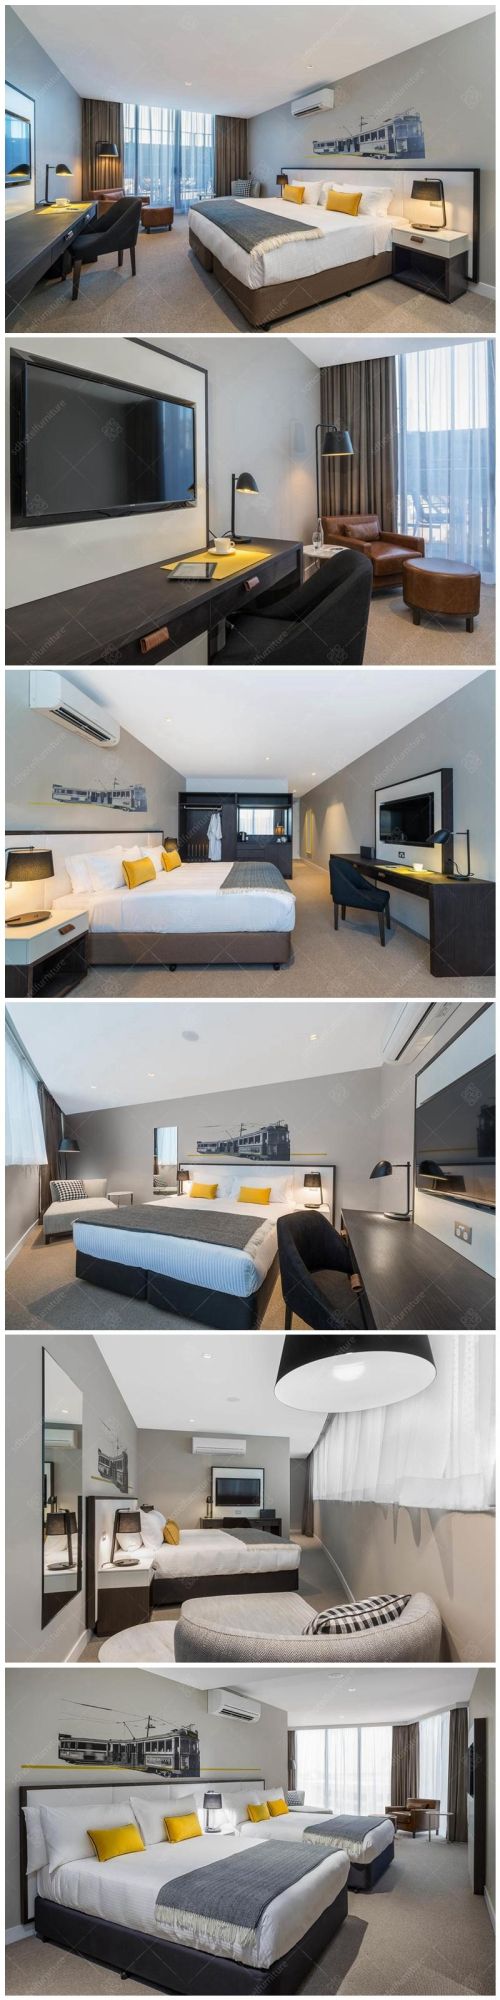 Modern Design Concise Hotel Room Furniture Sets for 4-5 Stars